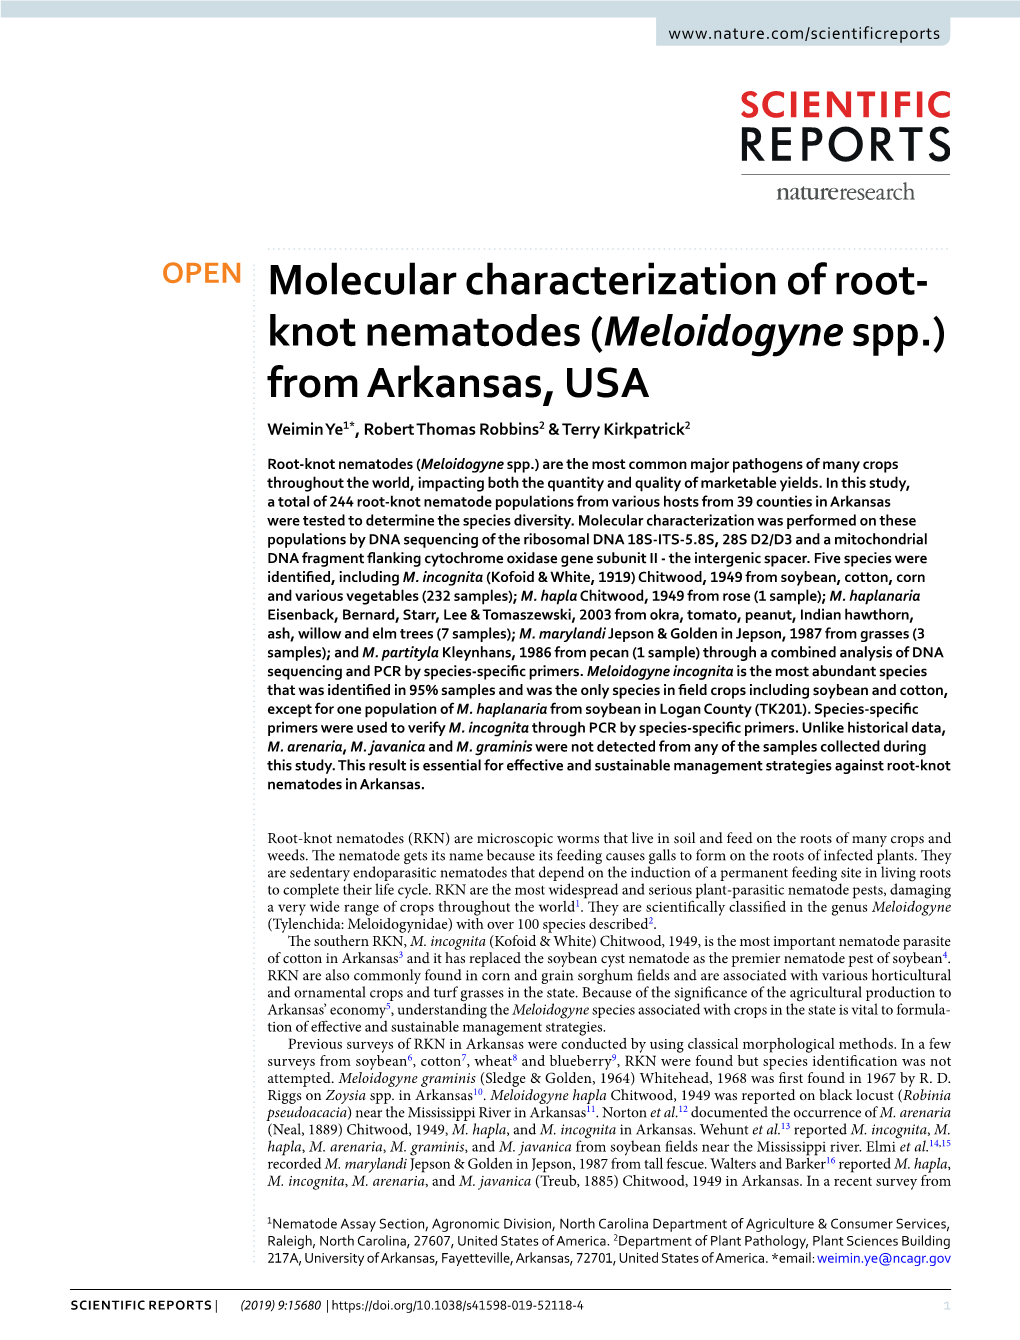 Molecular Characterization of Root-Knot Nematodes